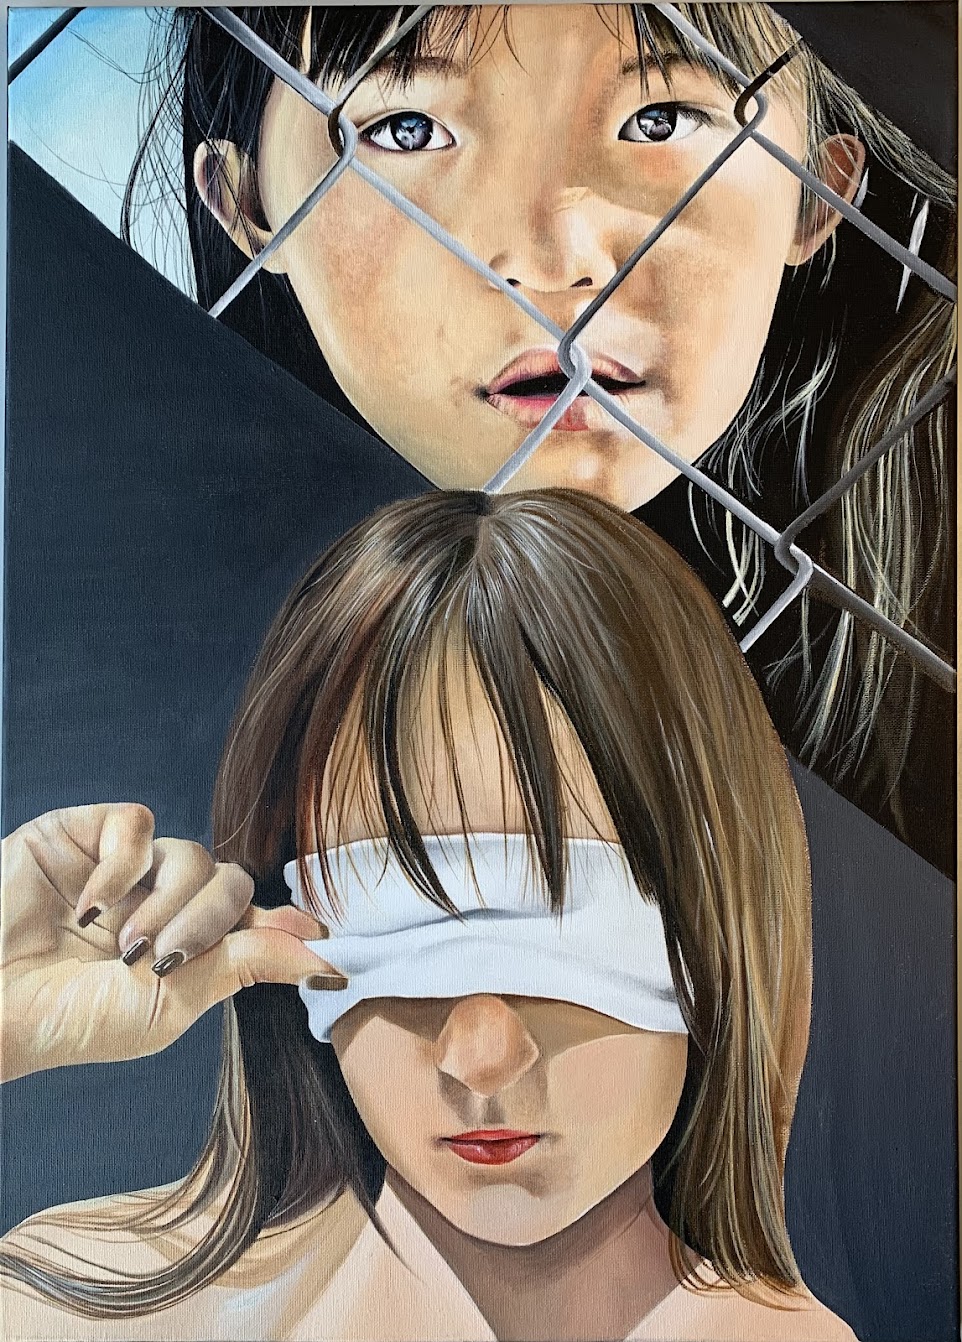 The Two Girls Blindfolded image